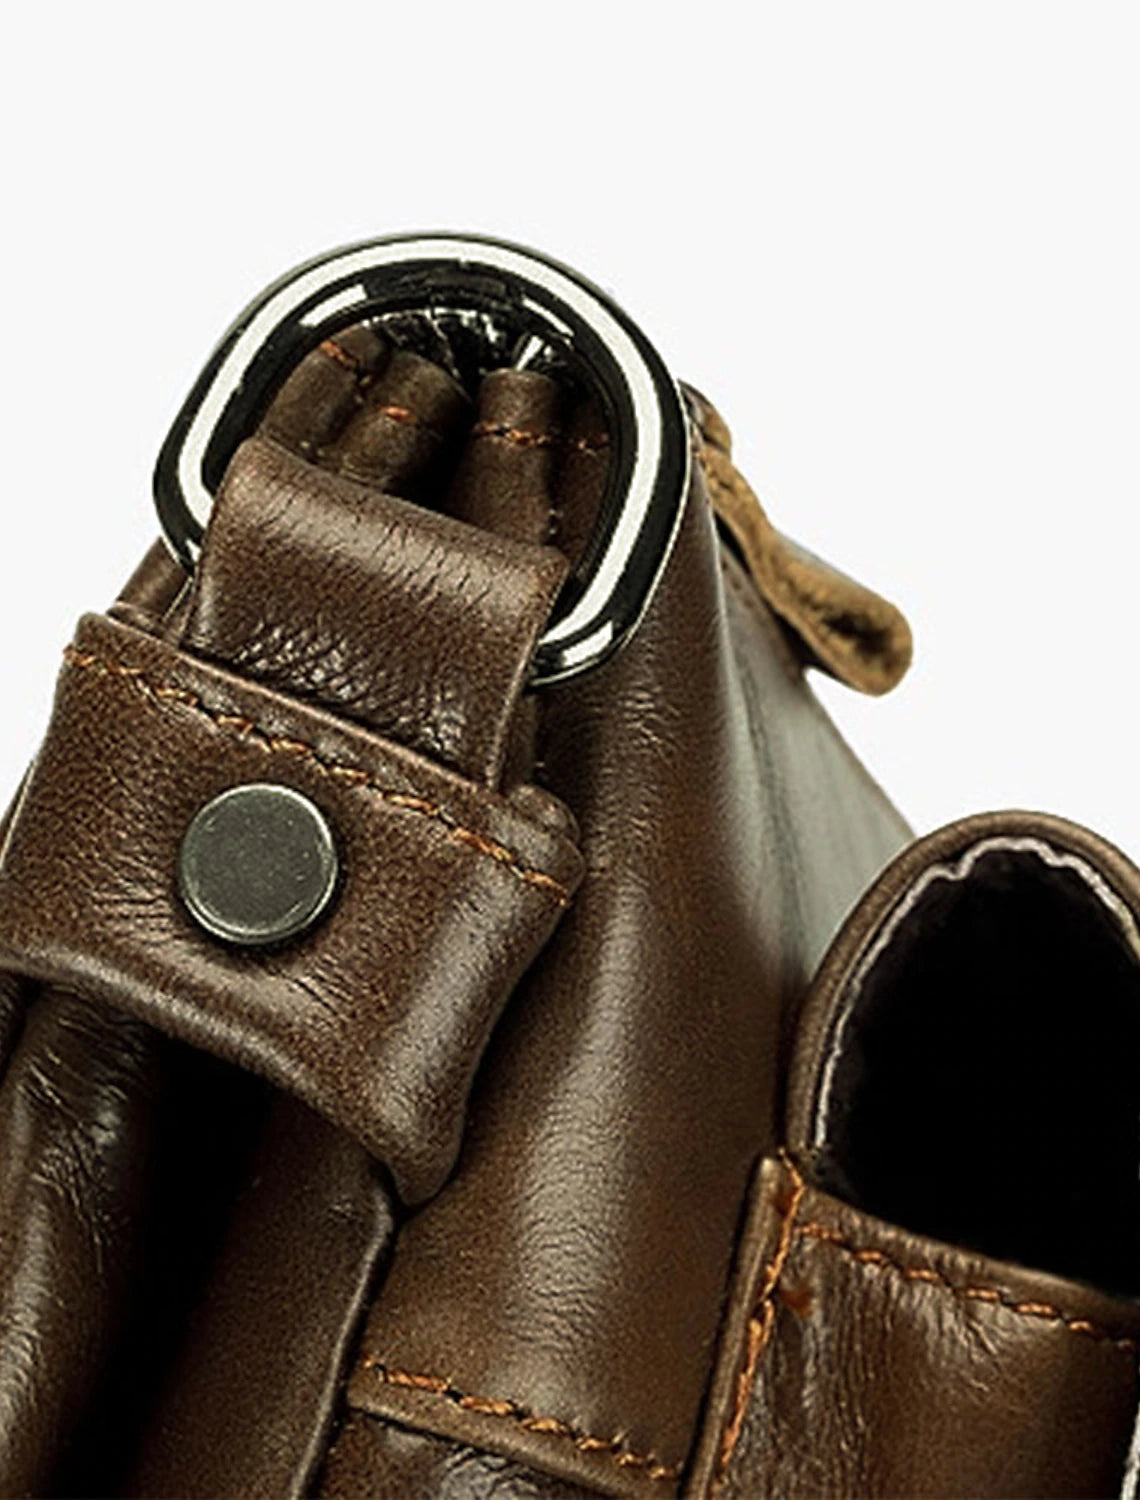 Men's Crossbody Bag Messenger Bag Nappa Leather Daily Zipper Solid Color Black Brown